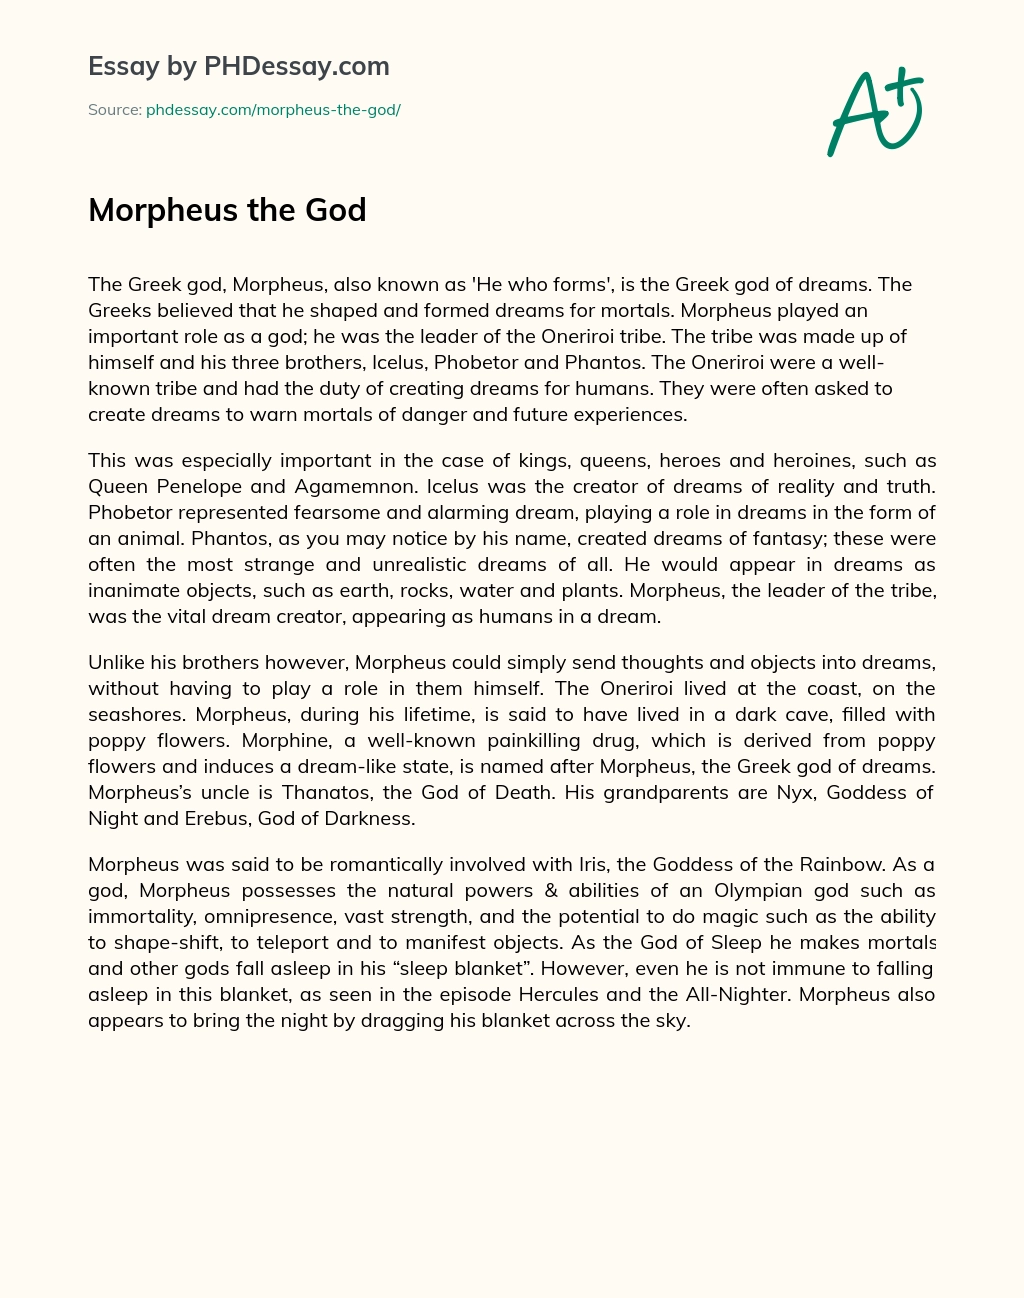 Morpheus the God essay